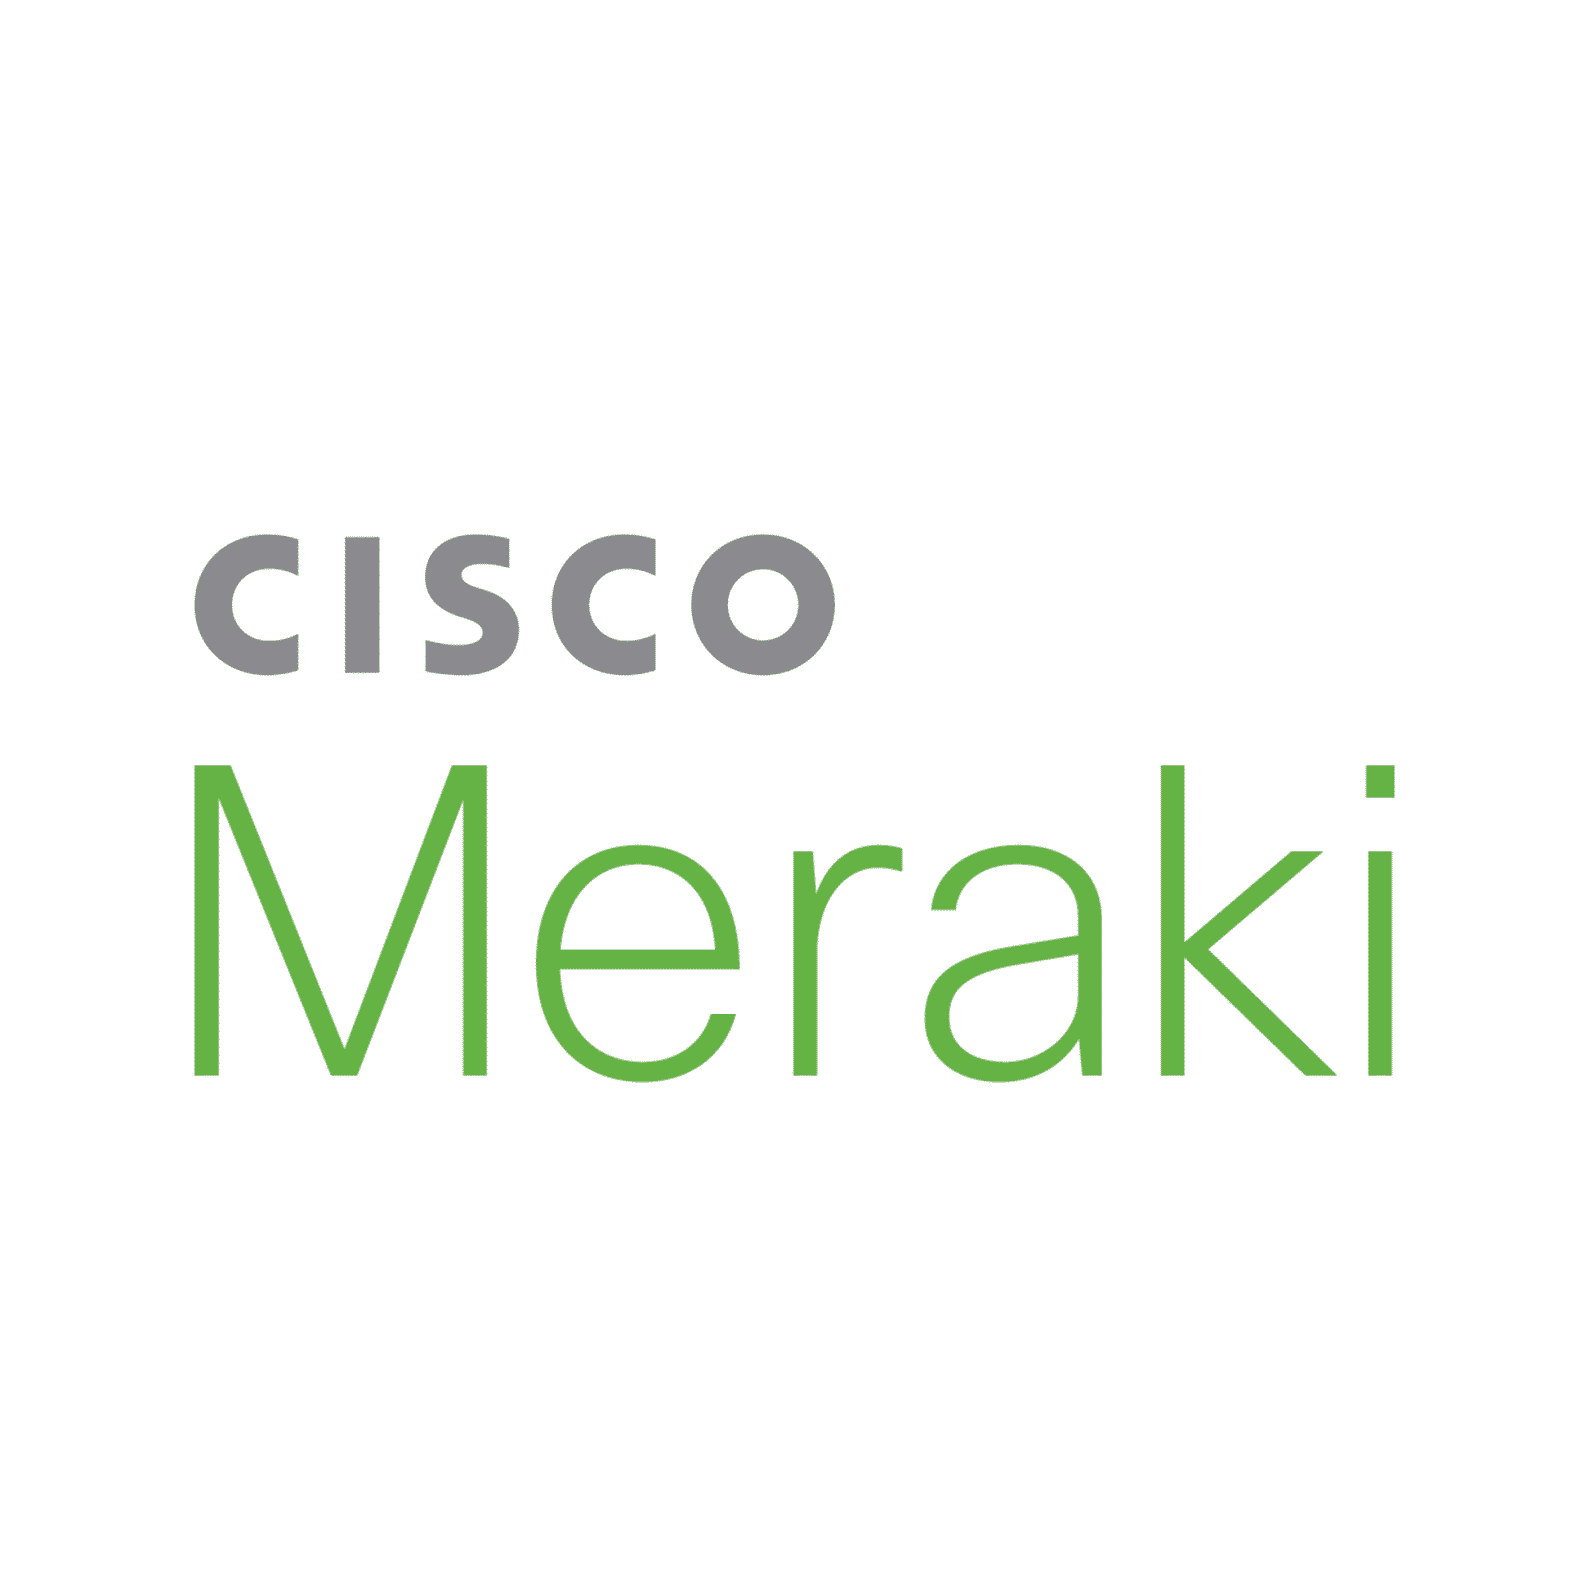 Cisco Meraki Logo vendor of zirous cloud managed services